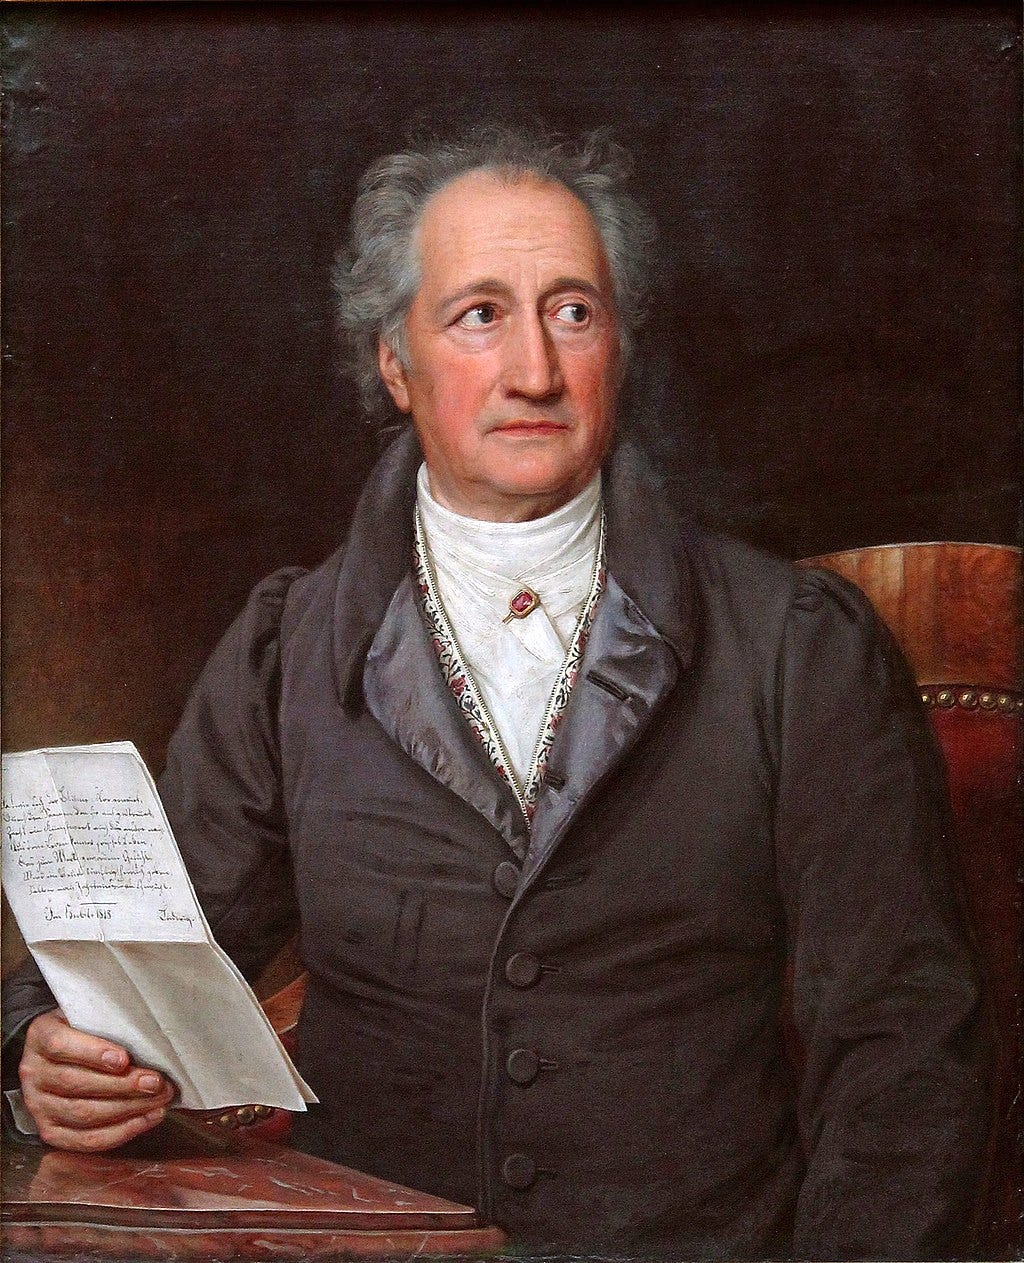 Goethe in 1828, by Joseph Karl Stieler